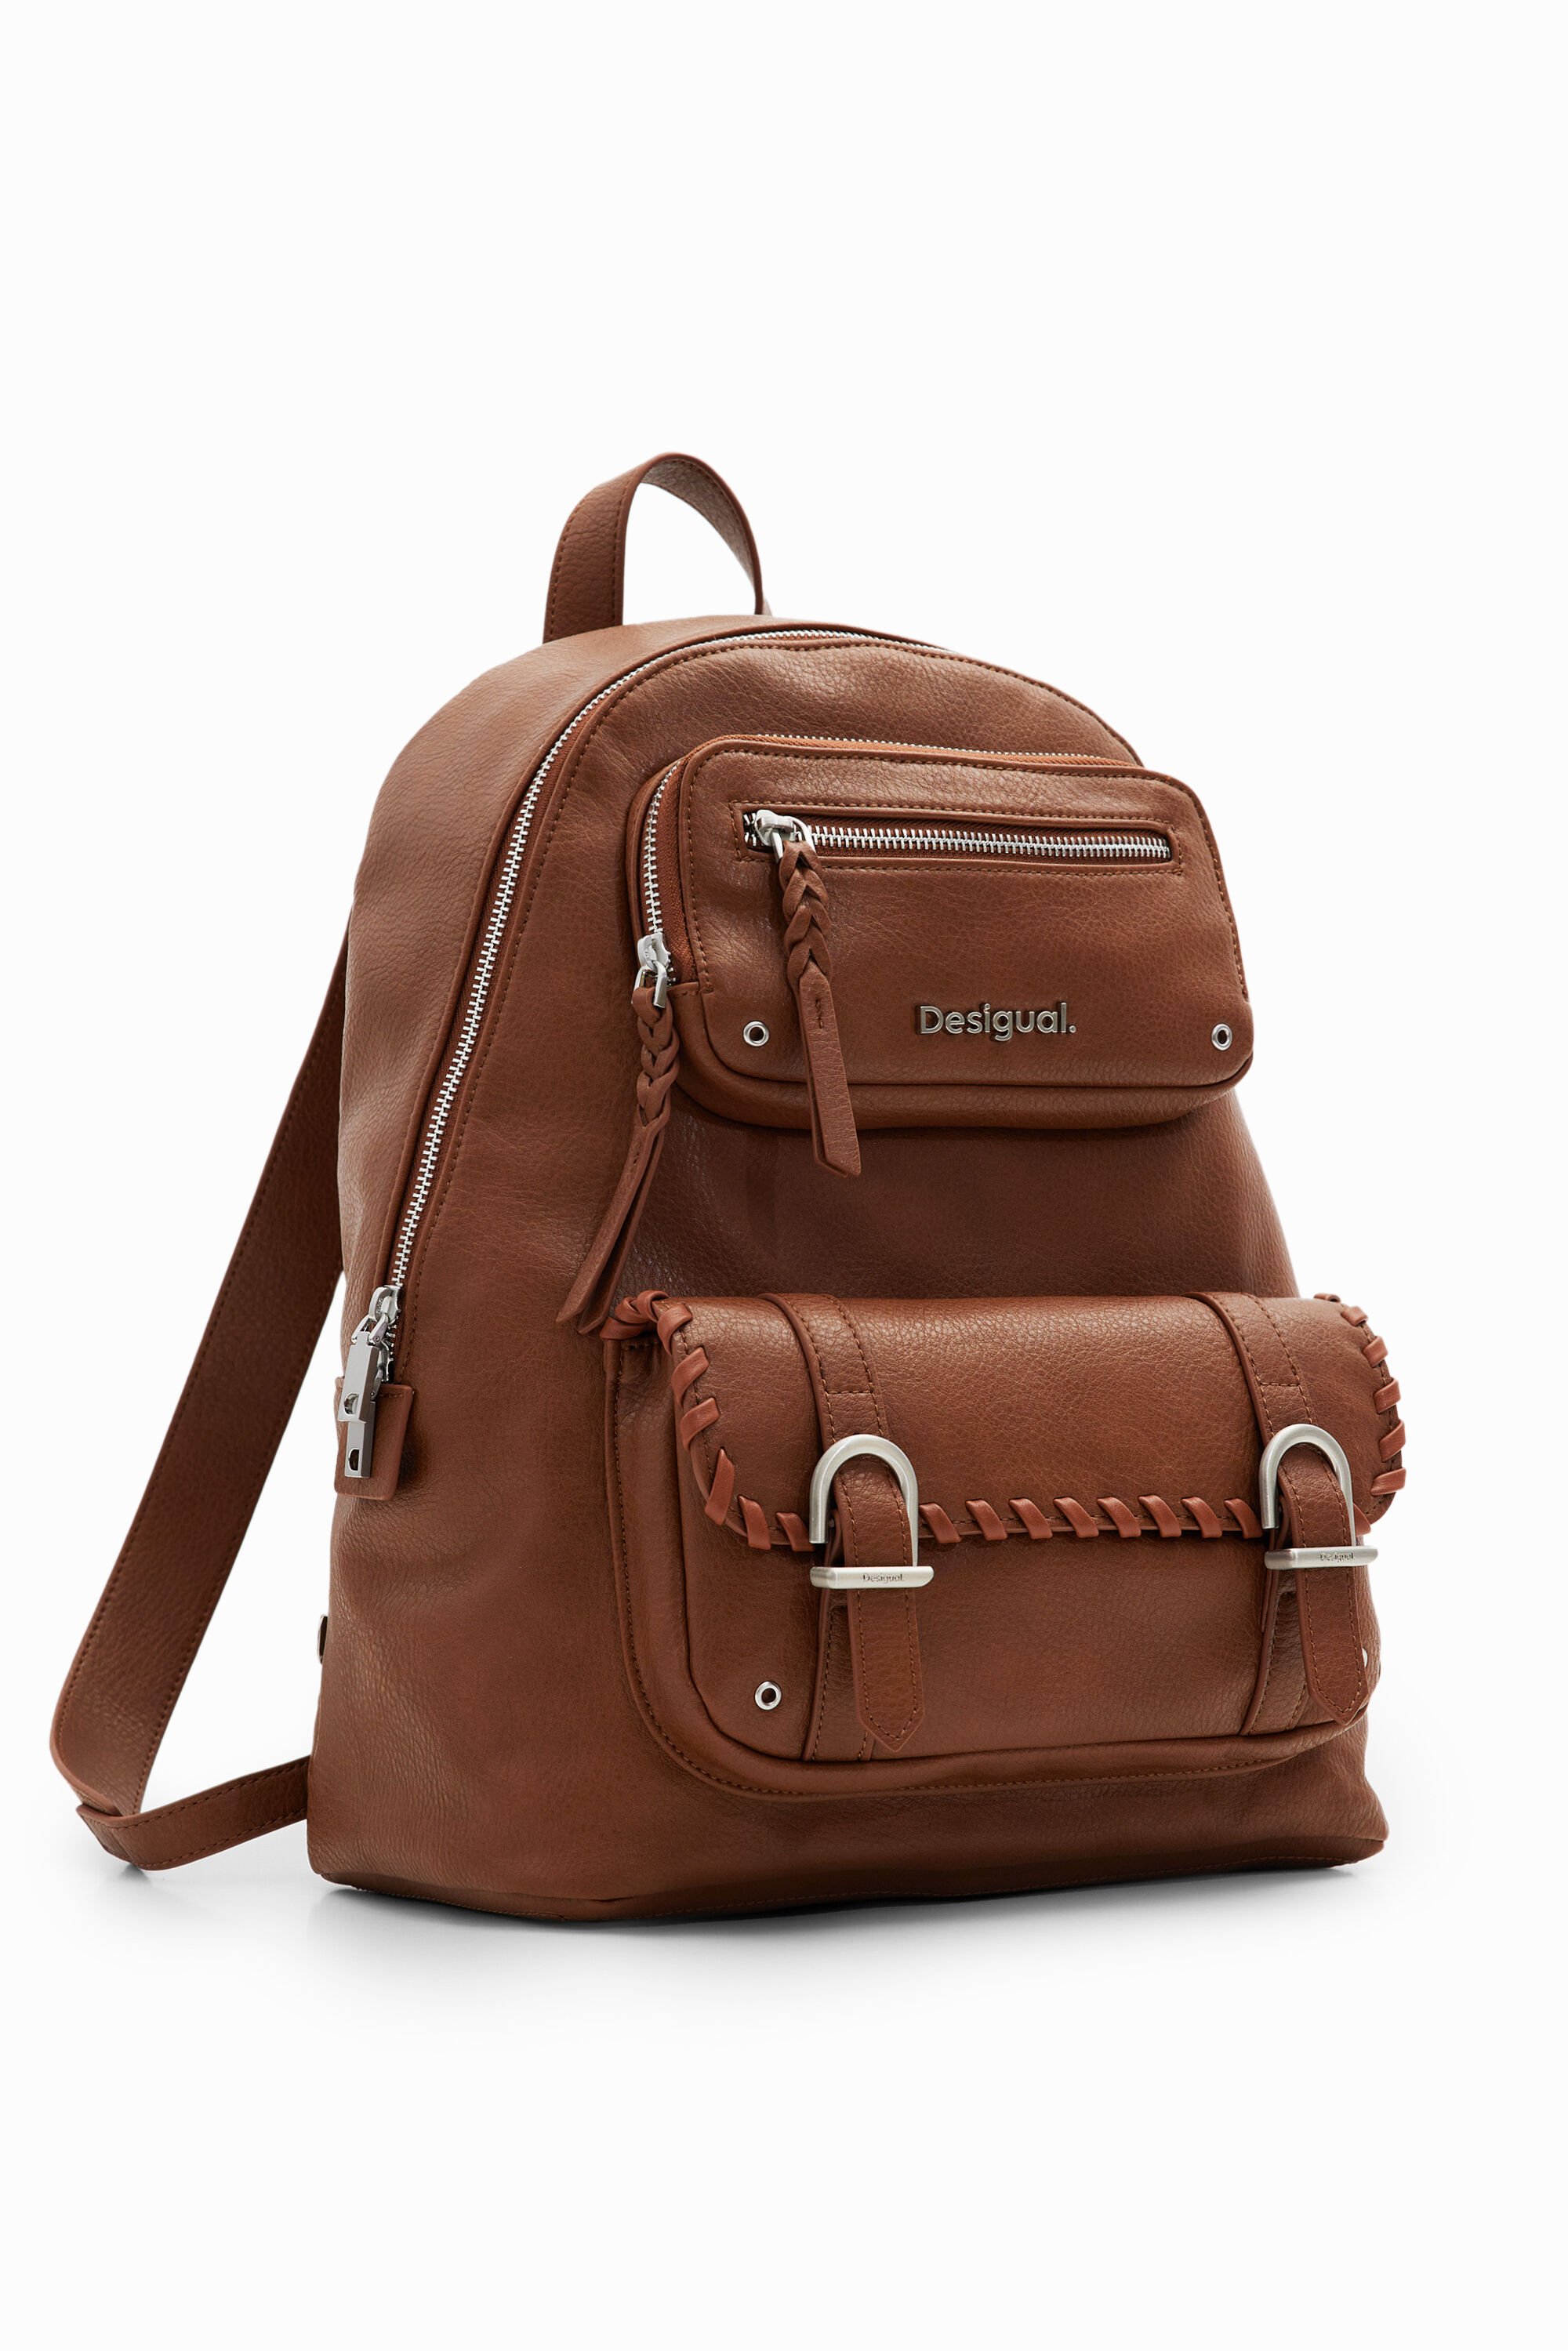 Desigual L Pockets Backpack In Brown